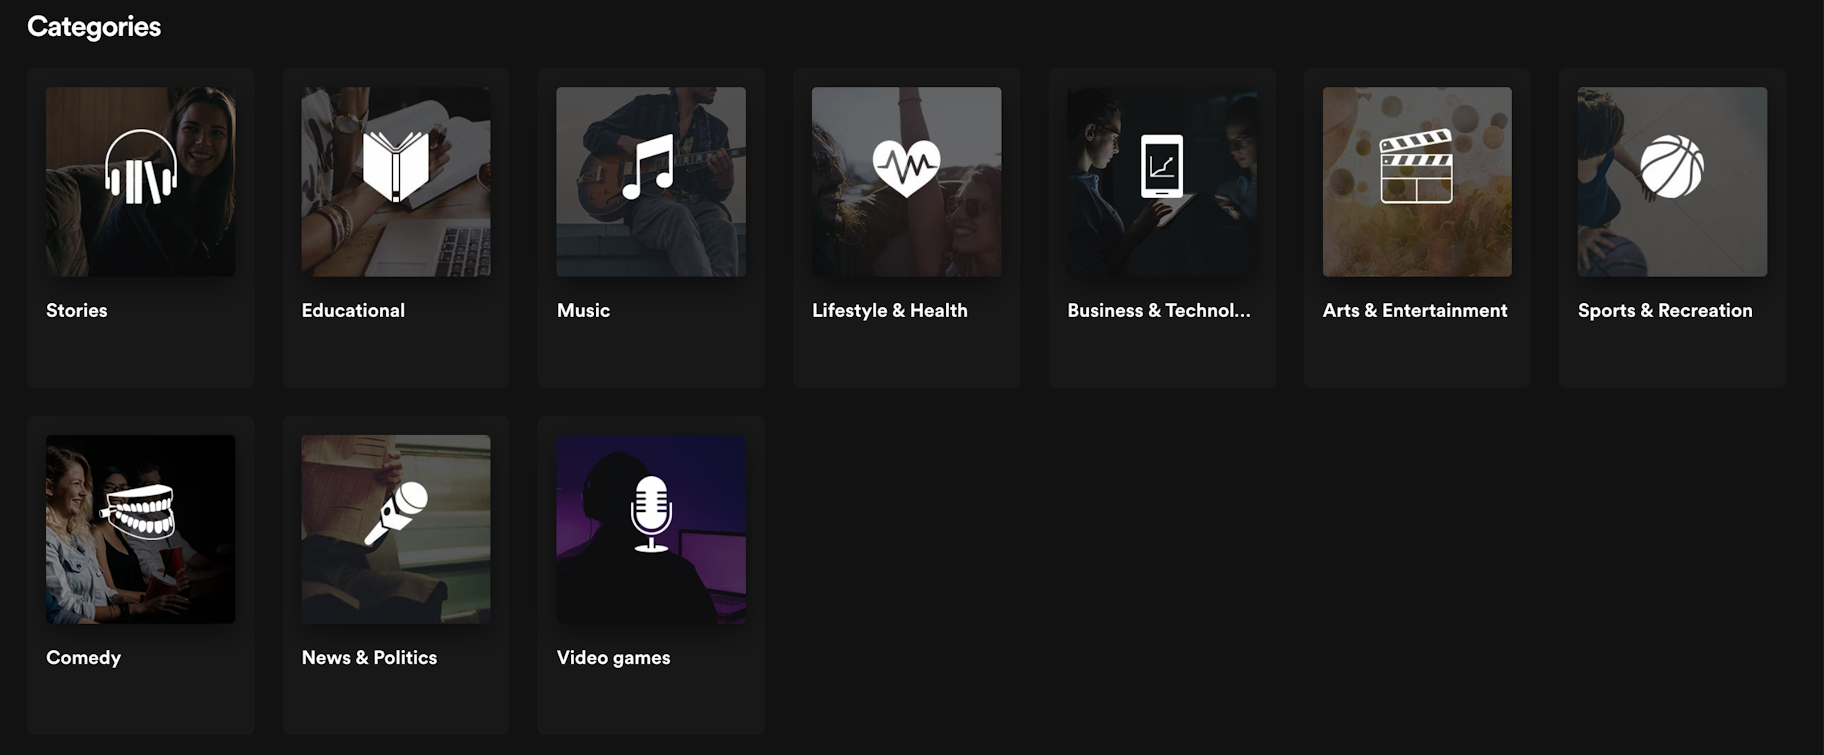 Spotify main podcast categories